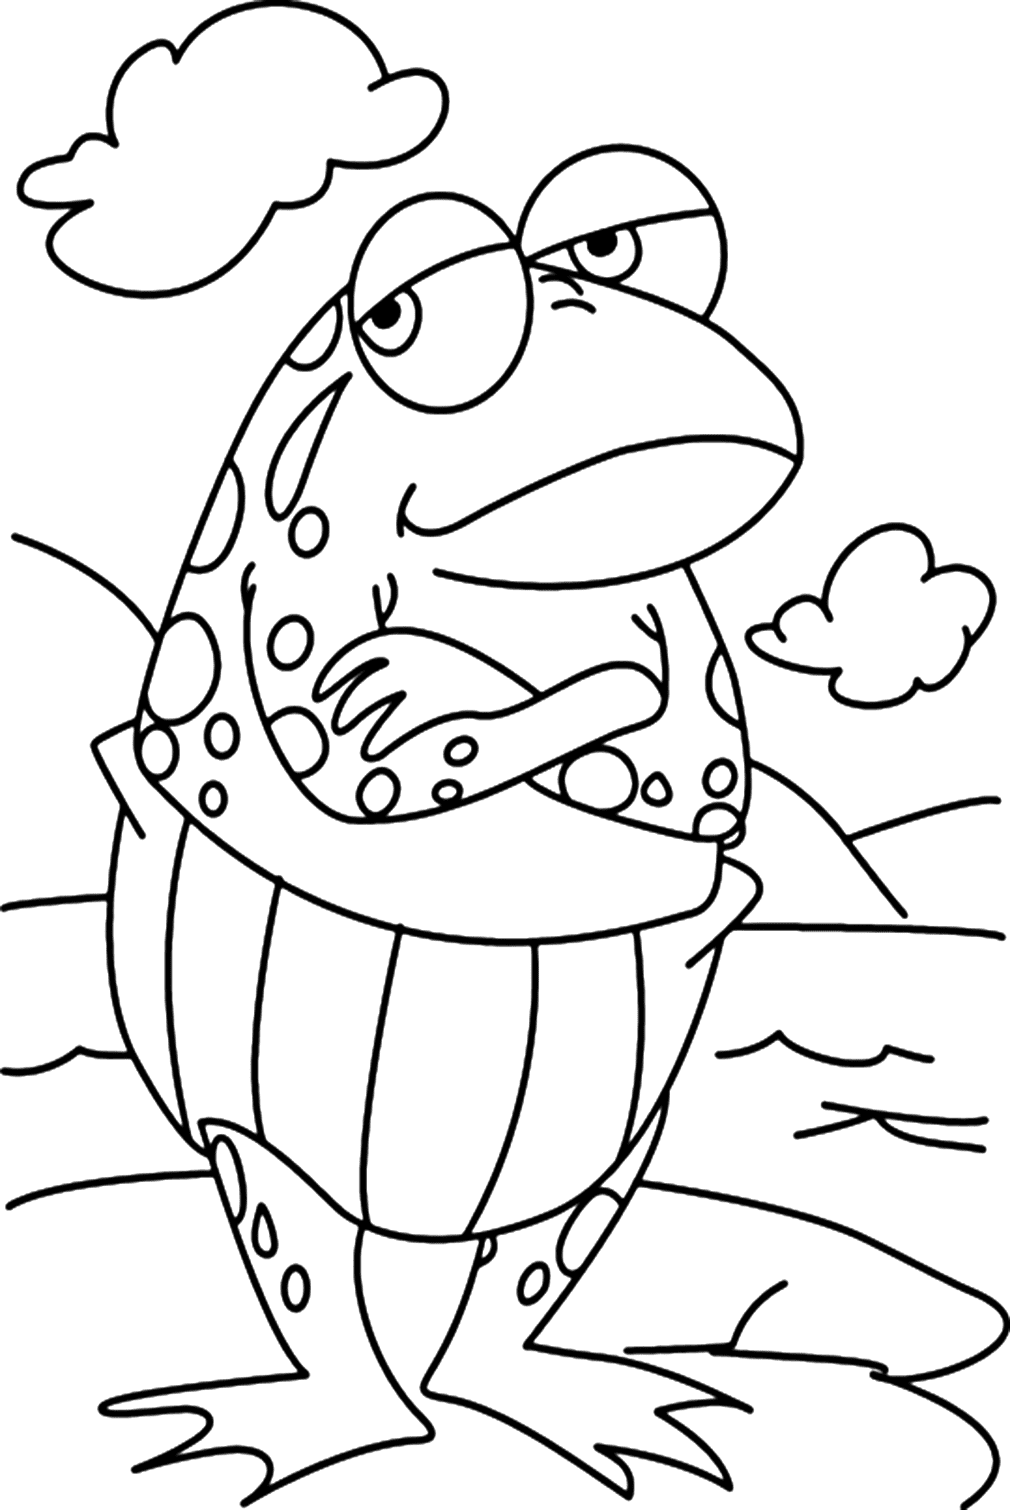 Animierte Cane Toad-Malseite von Cane Toad